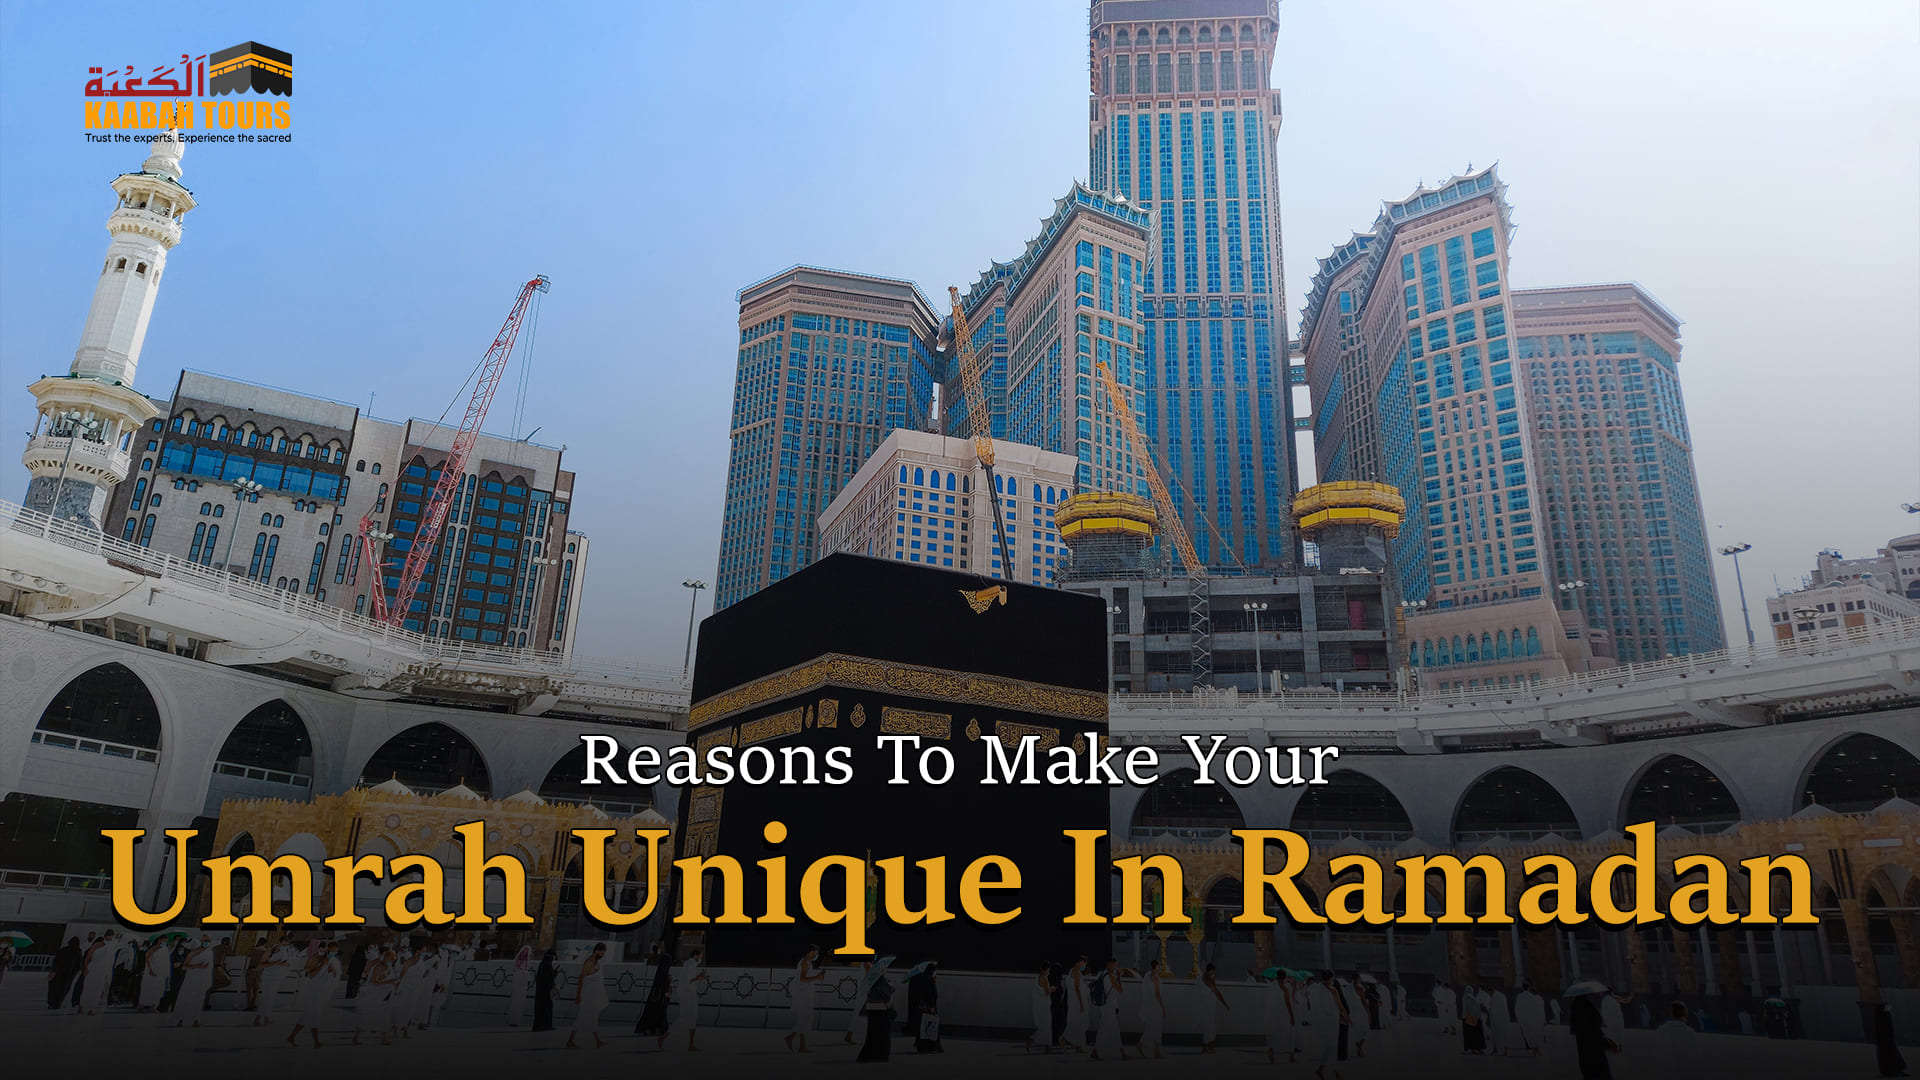 Unique Reasons During Ramadan